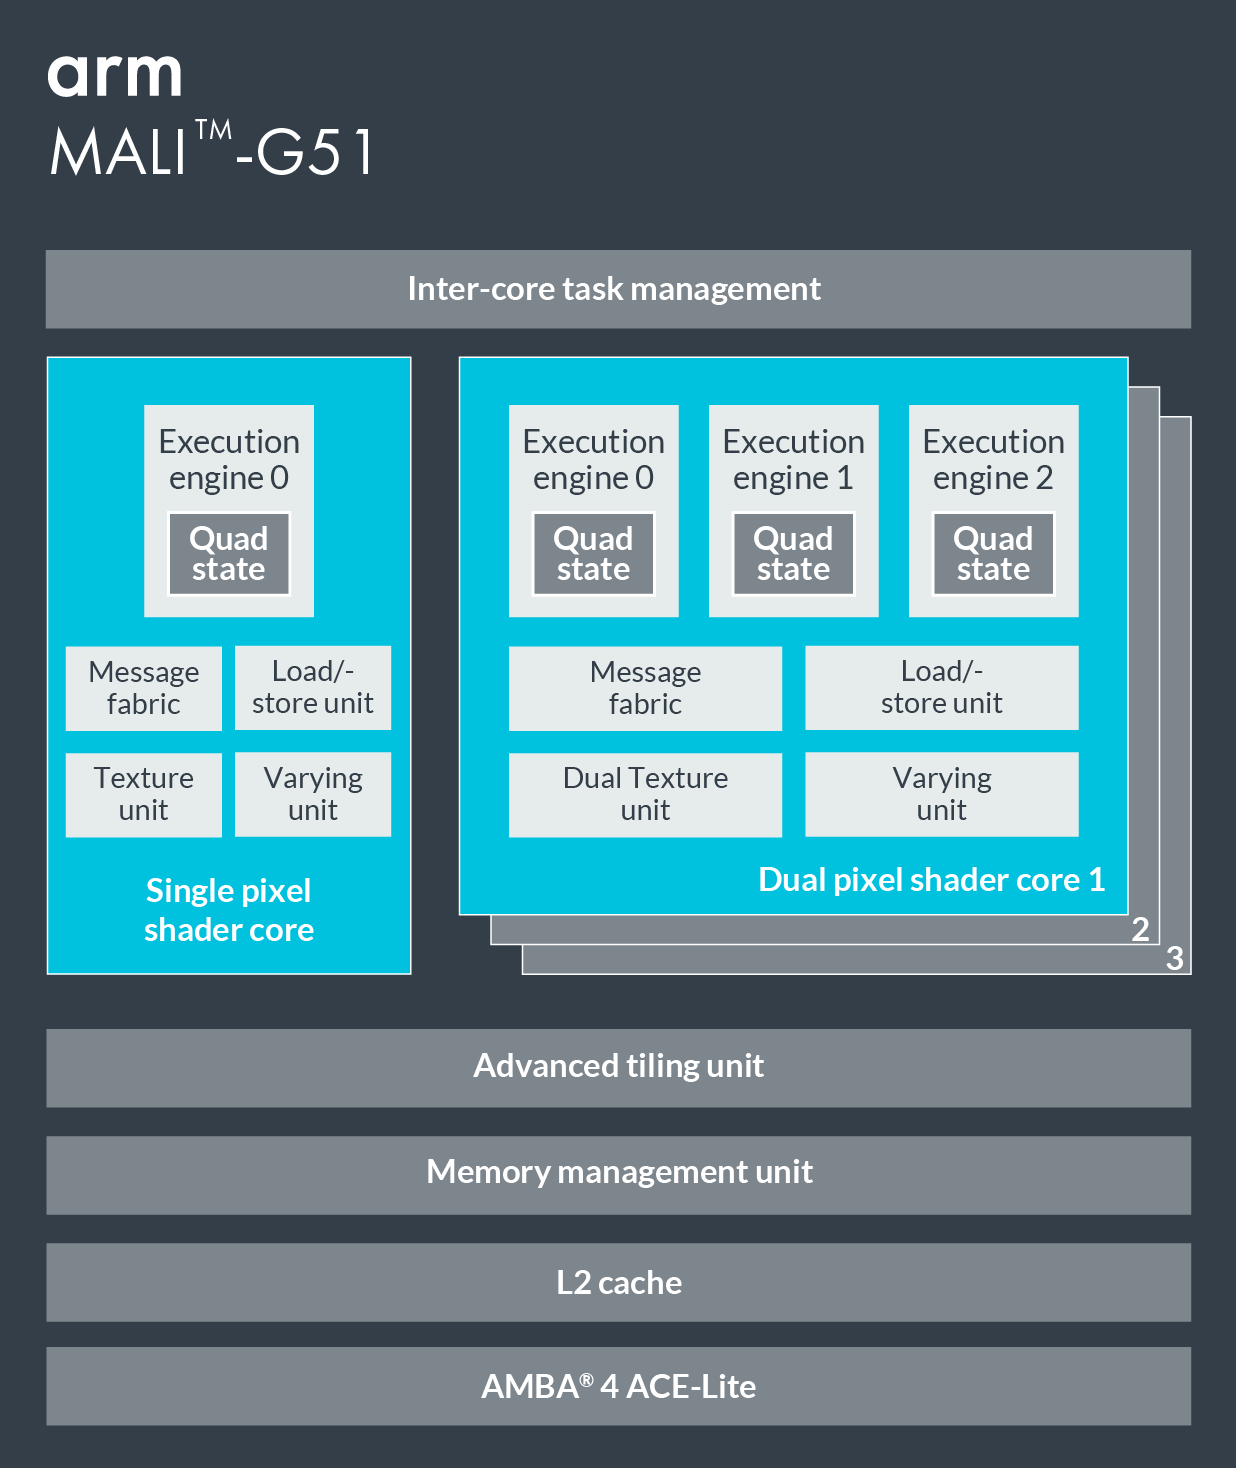 Rechazado miércoles Bandido ARM Mali-G51 MP4 GPU - Benchmarks and Specs - NotebookCheck.net Tech